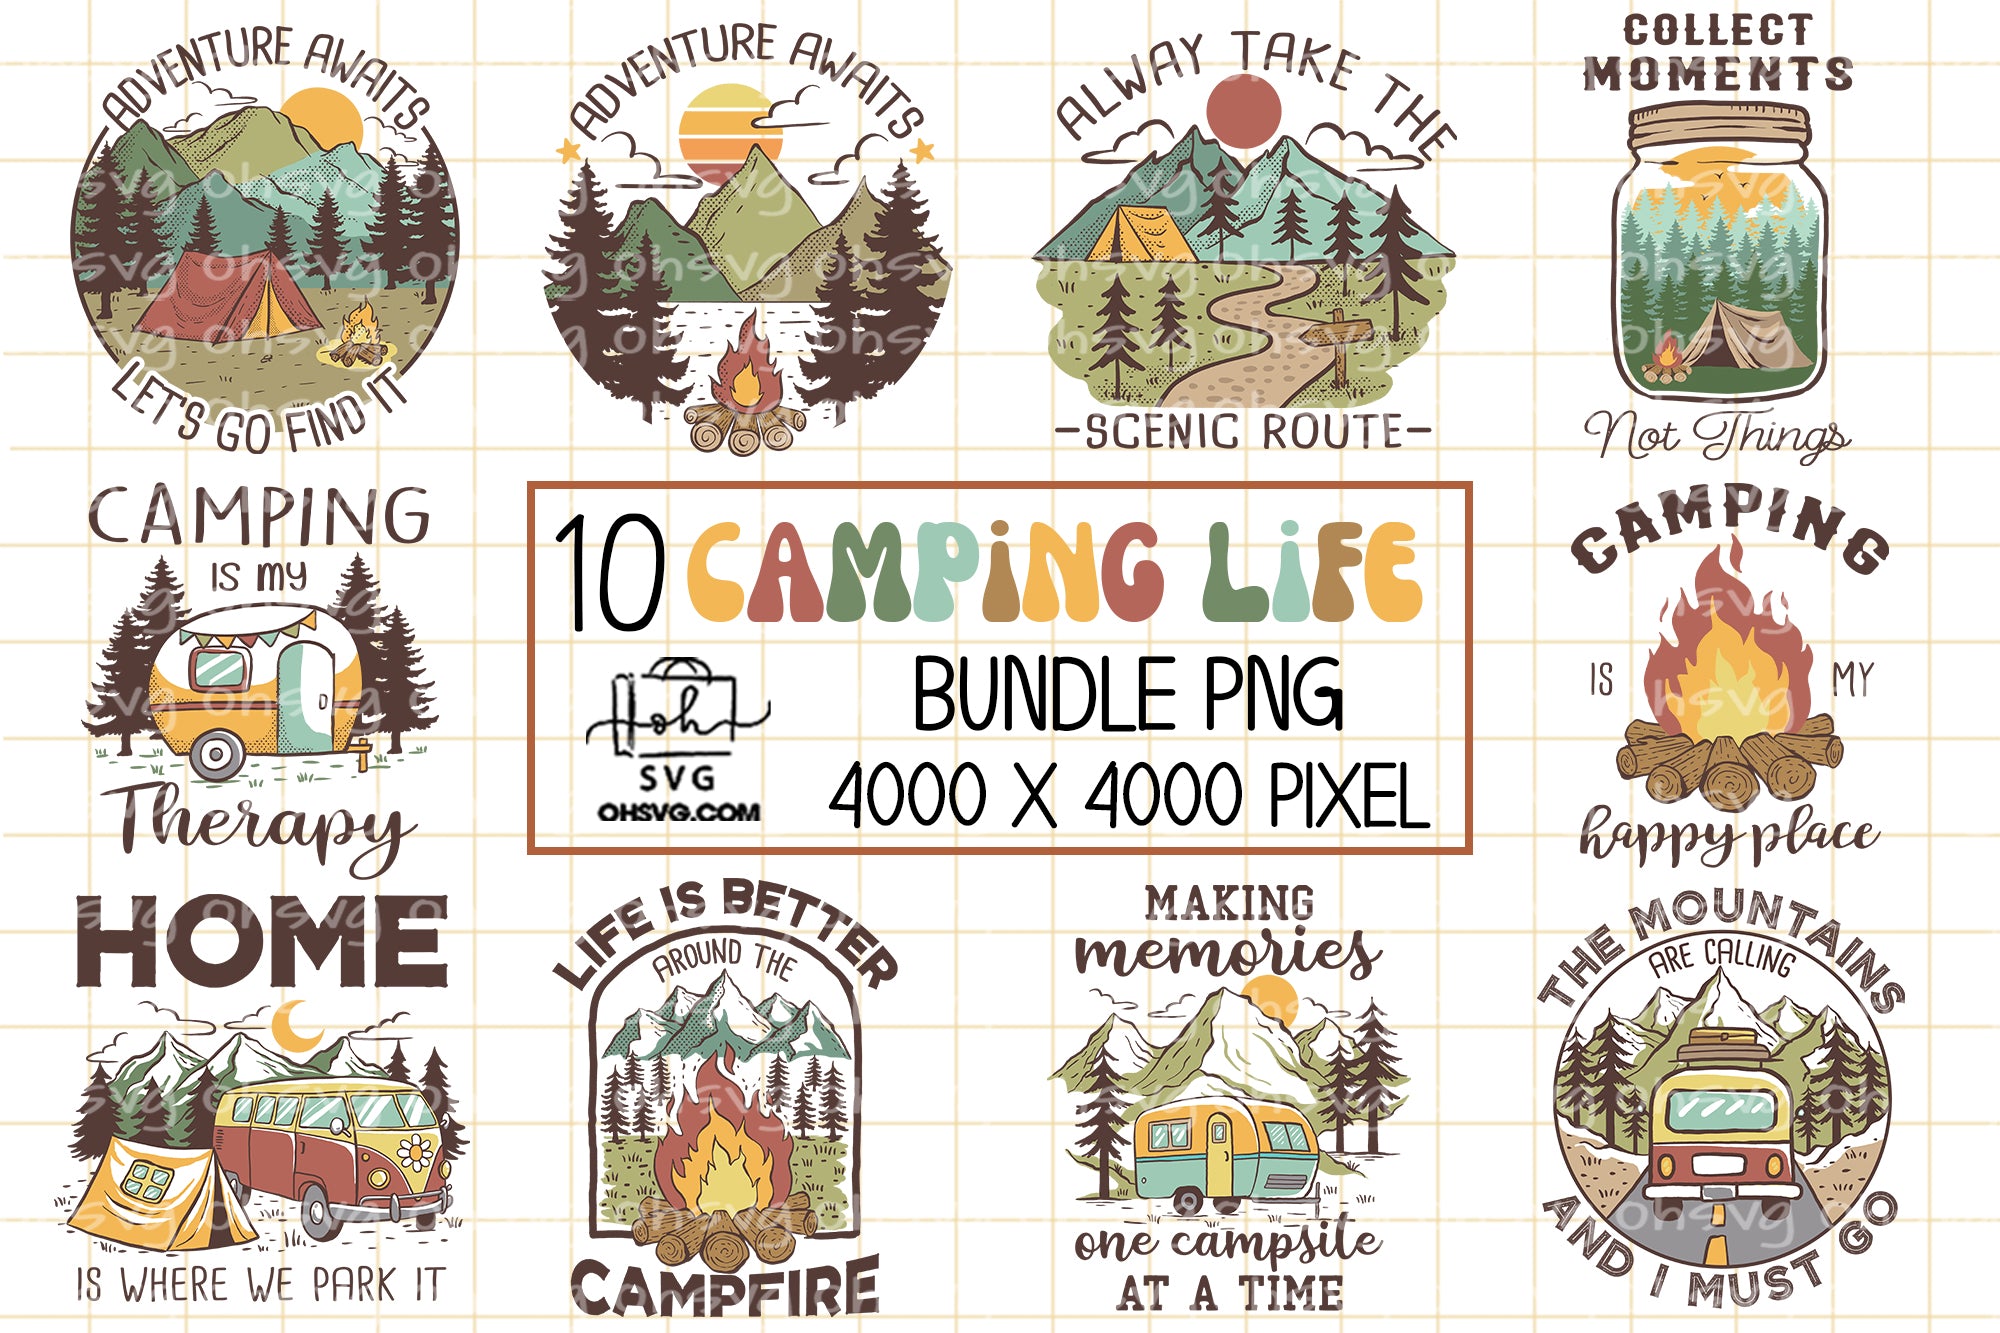 Camping Life Sublimation Bundles PNG, Camping Life PNG, Camping Outdoor PNG